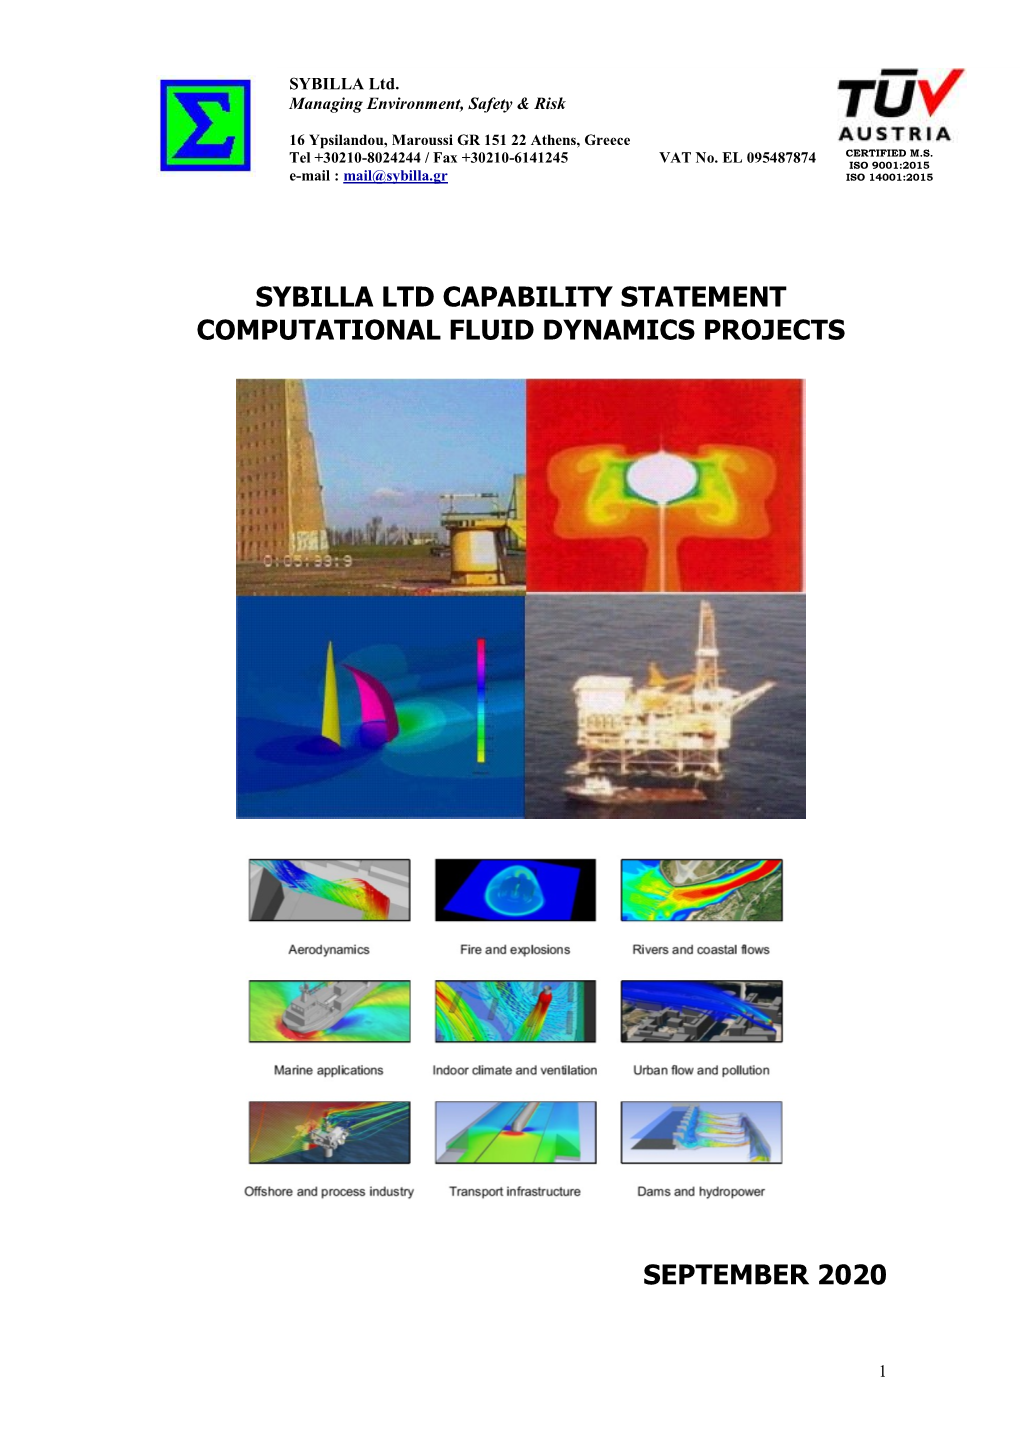 Sybilla Ltd Capability Statement Computational Fluid Dynamics Projects